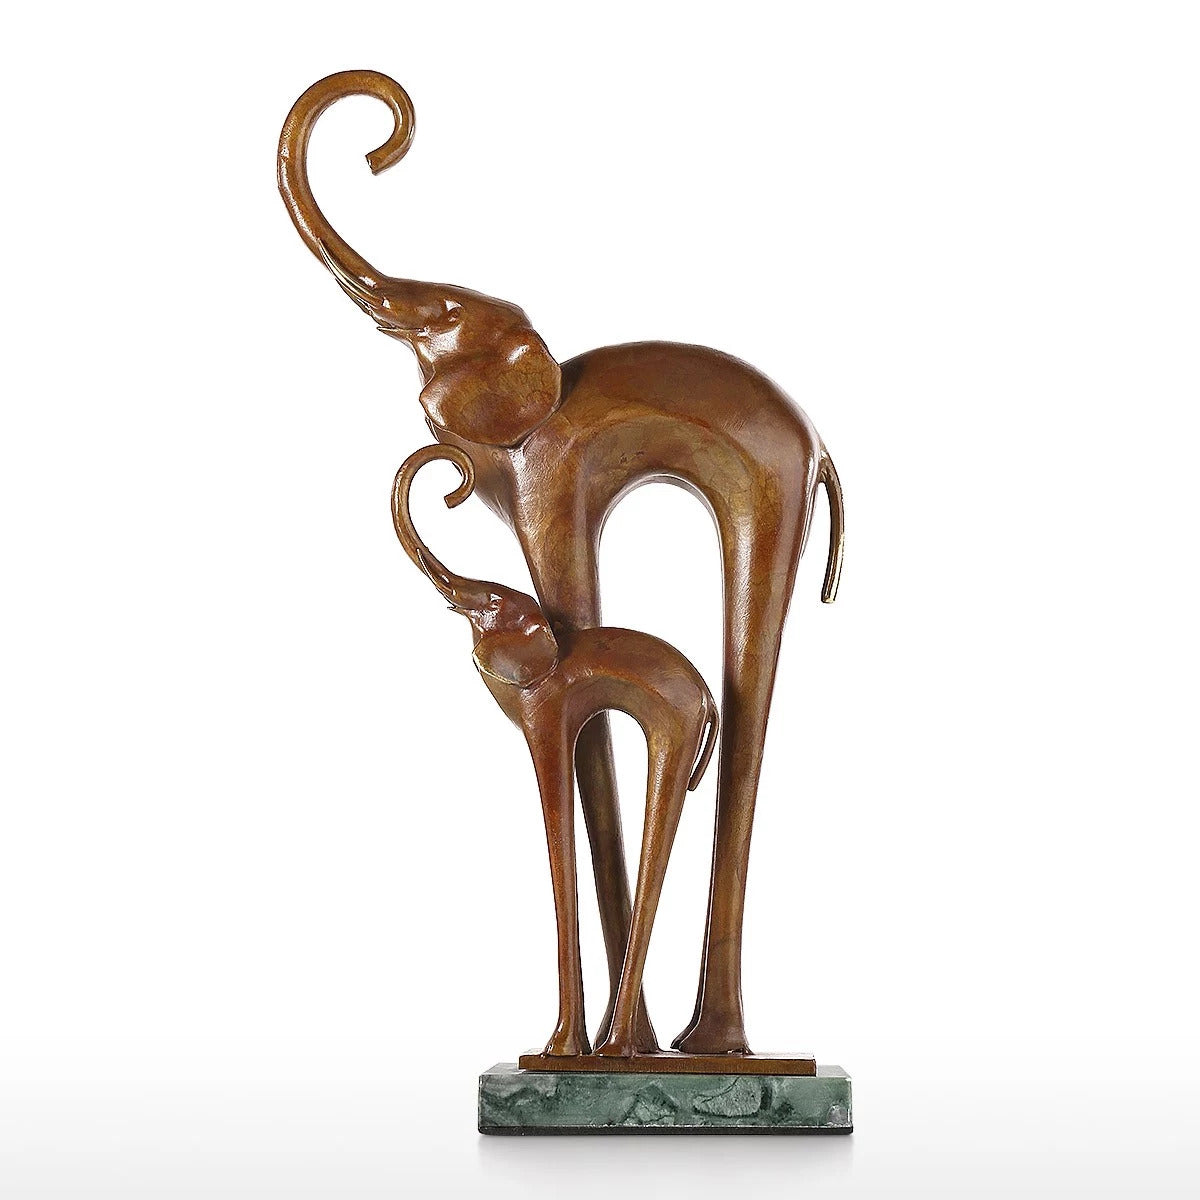 Brass Elephant Statue Decor Ornament: Calm Grandeur & Family Tree Soul